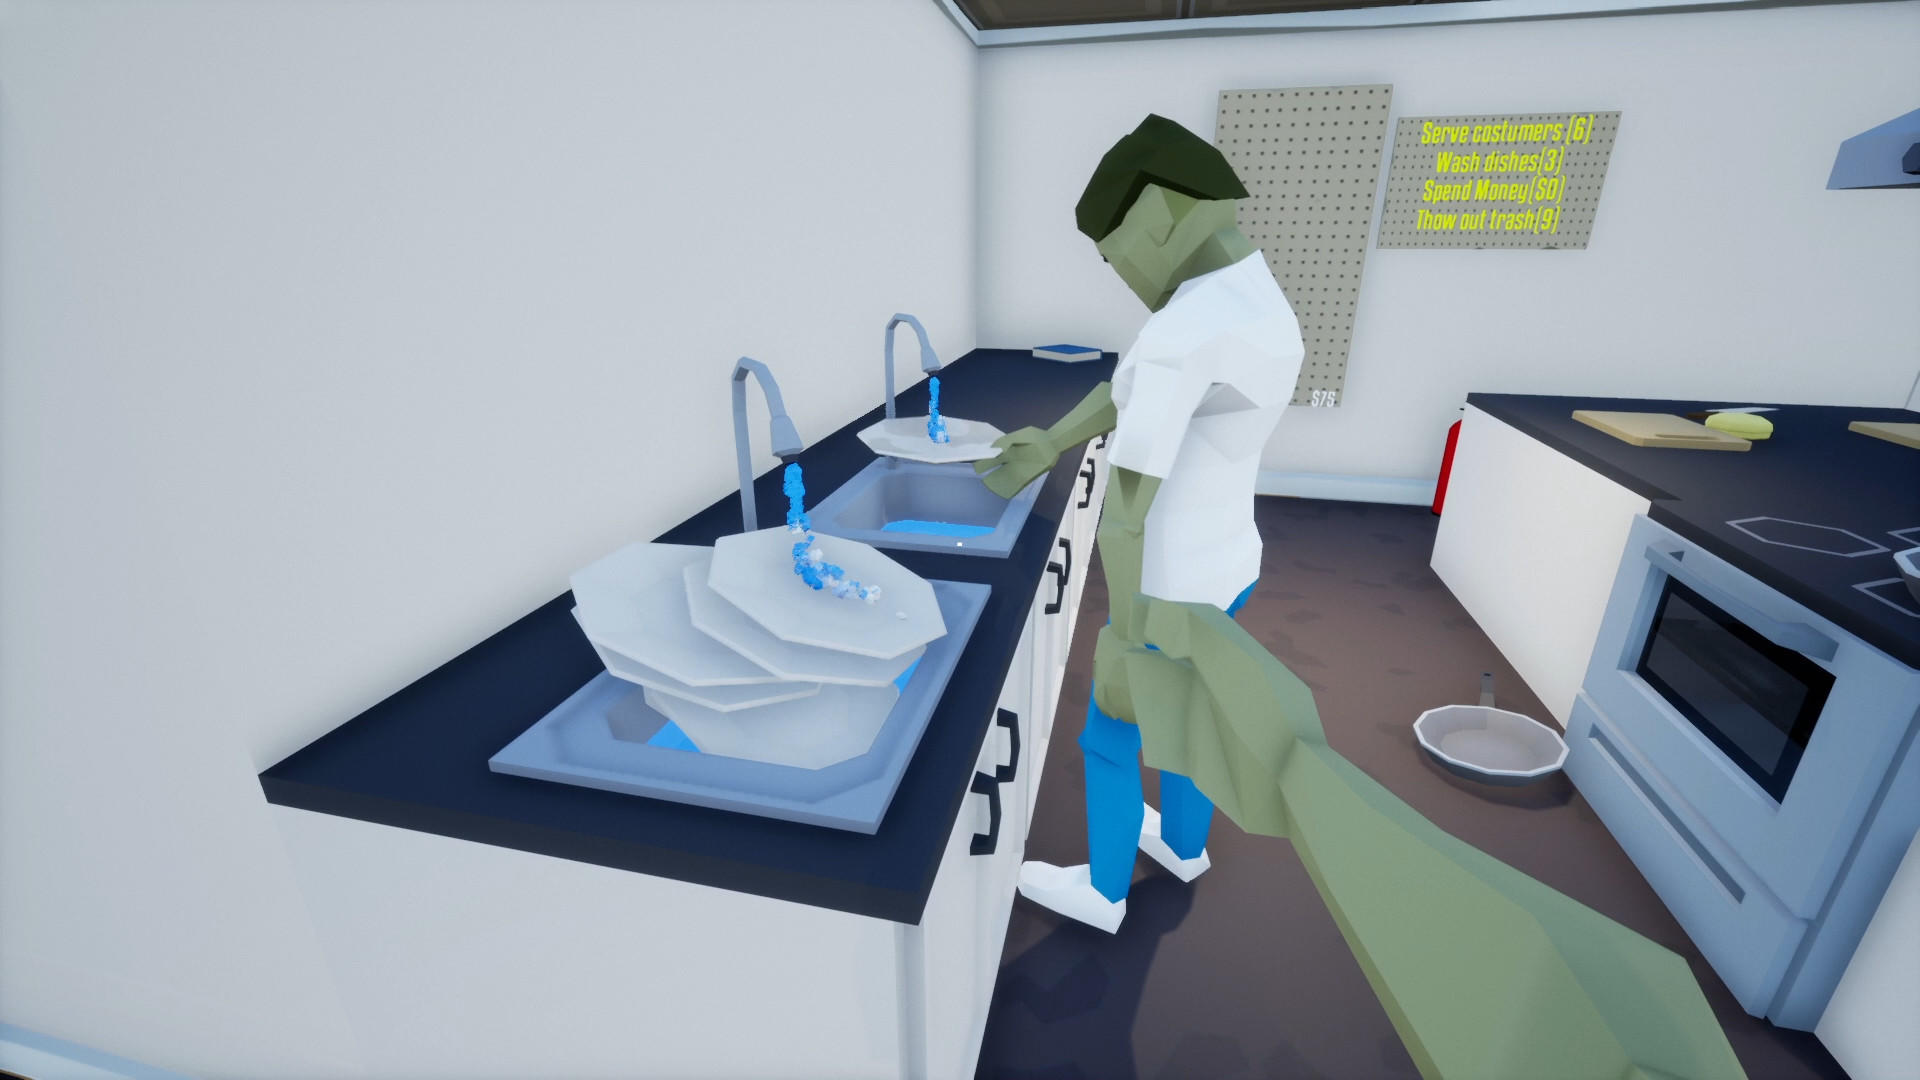 One-armed cook screenshot game